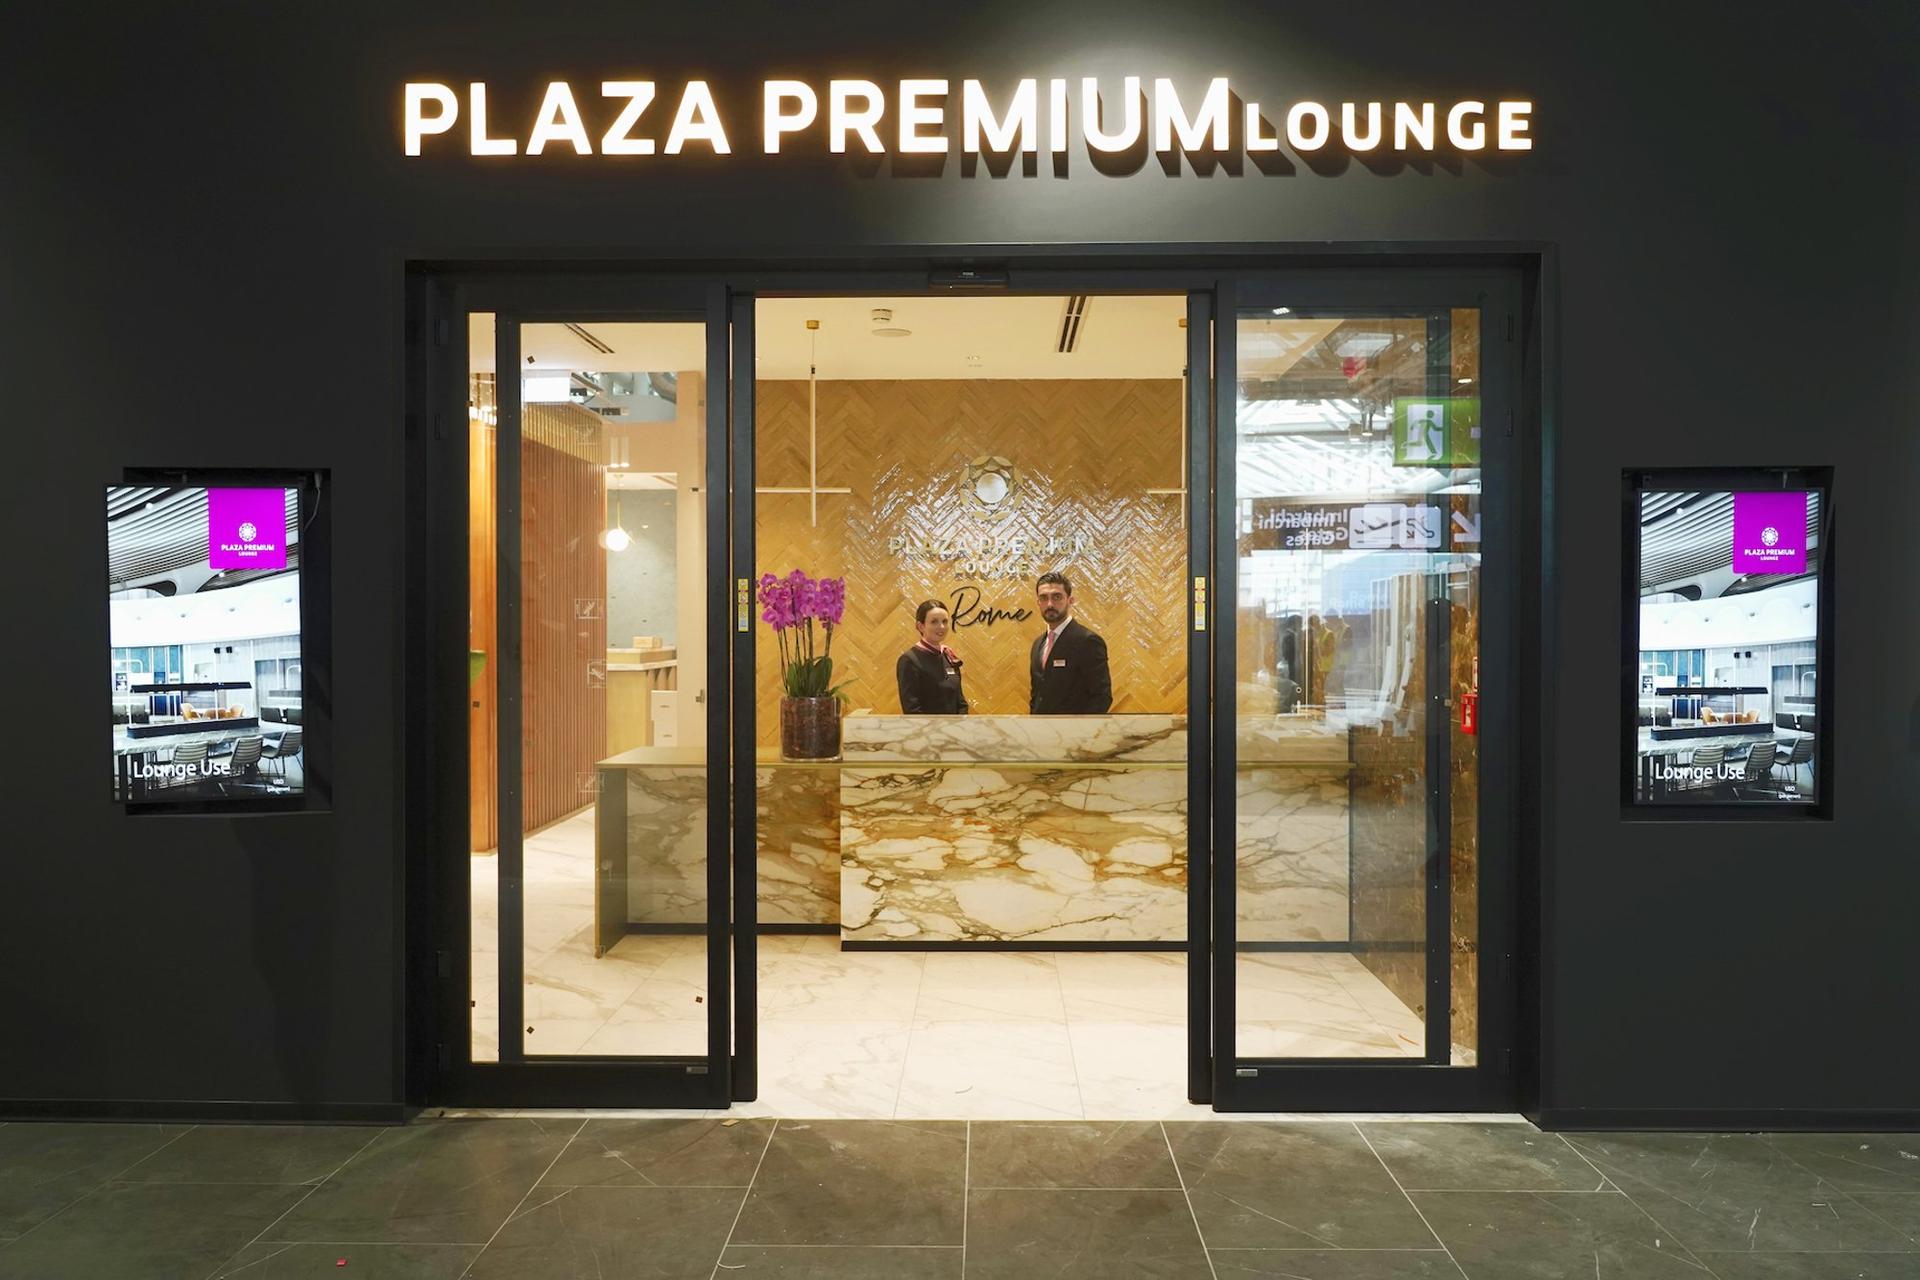 Plaza Premium Lounge image 2 of 5